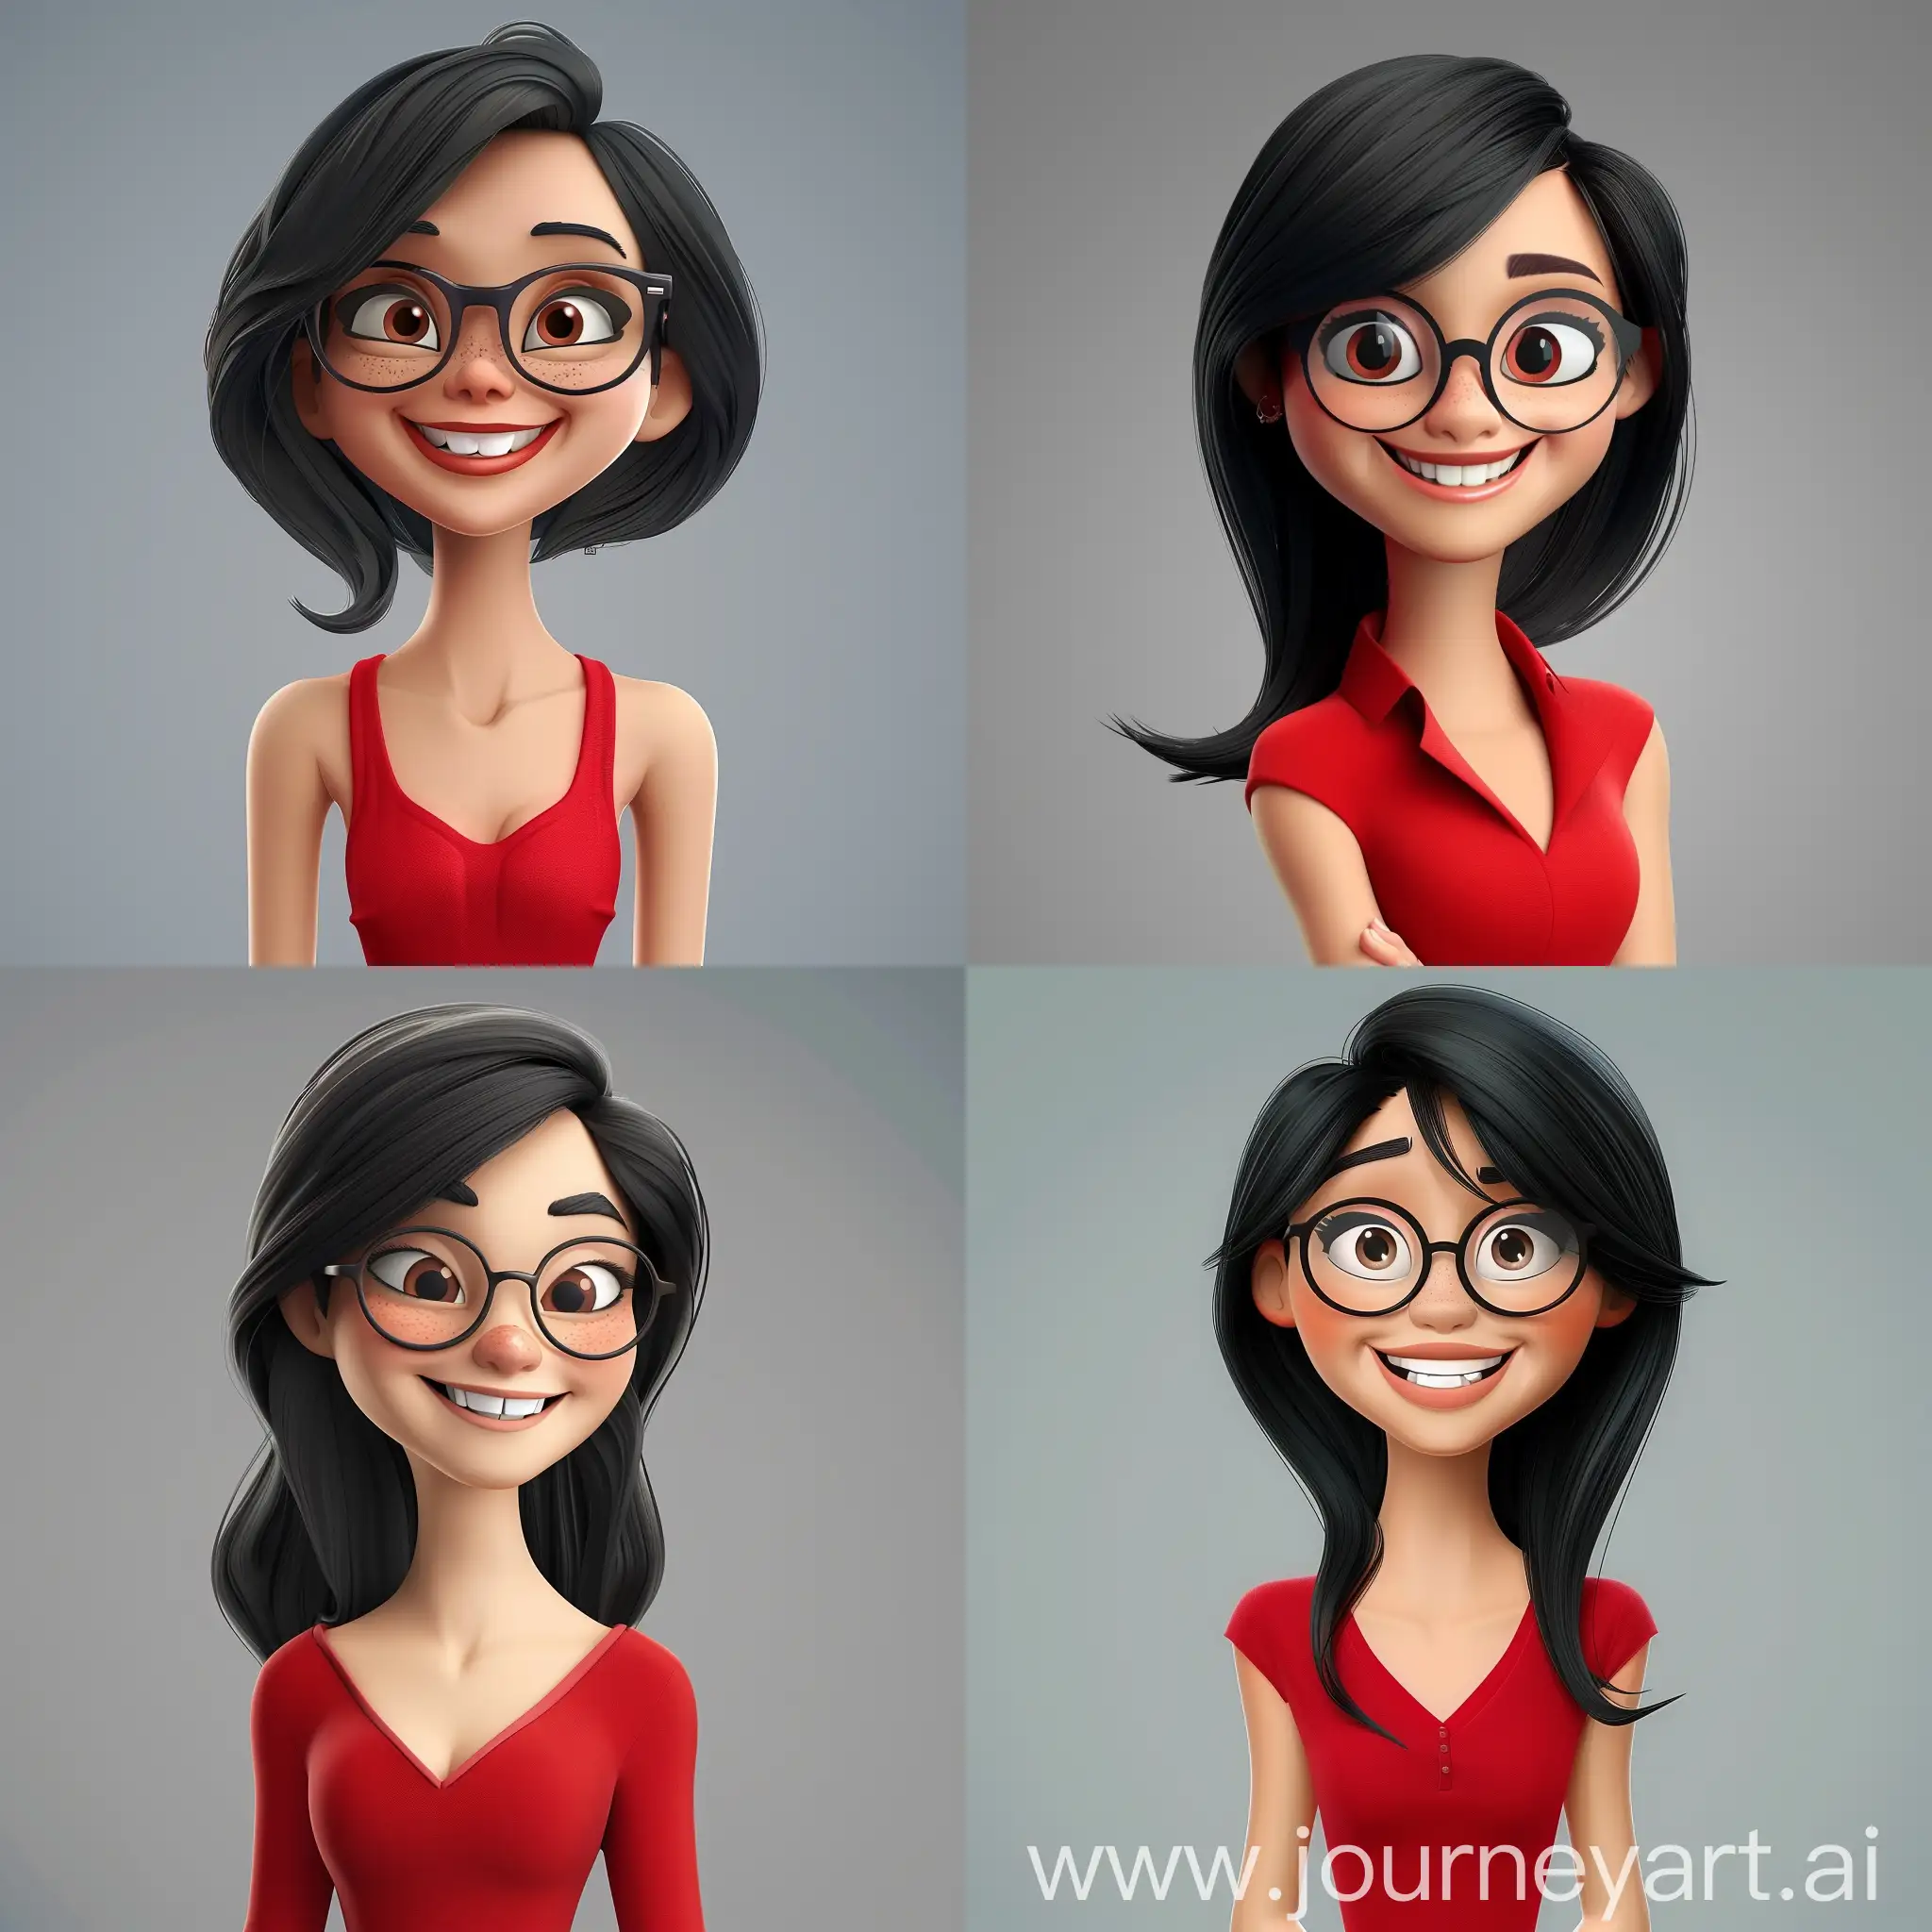 Cartoon 3d pixar studio, disney pixar style, cute woman with black hair, glasses, red top, smiling, grey background